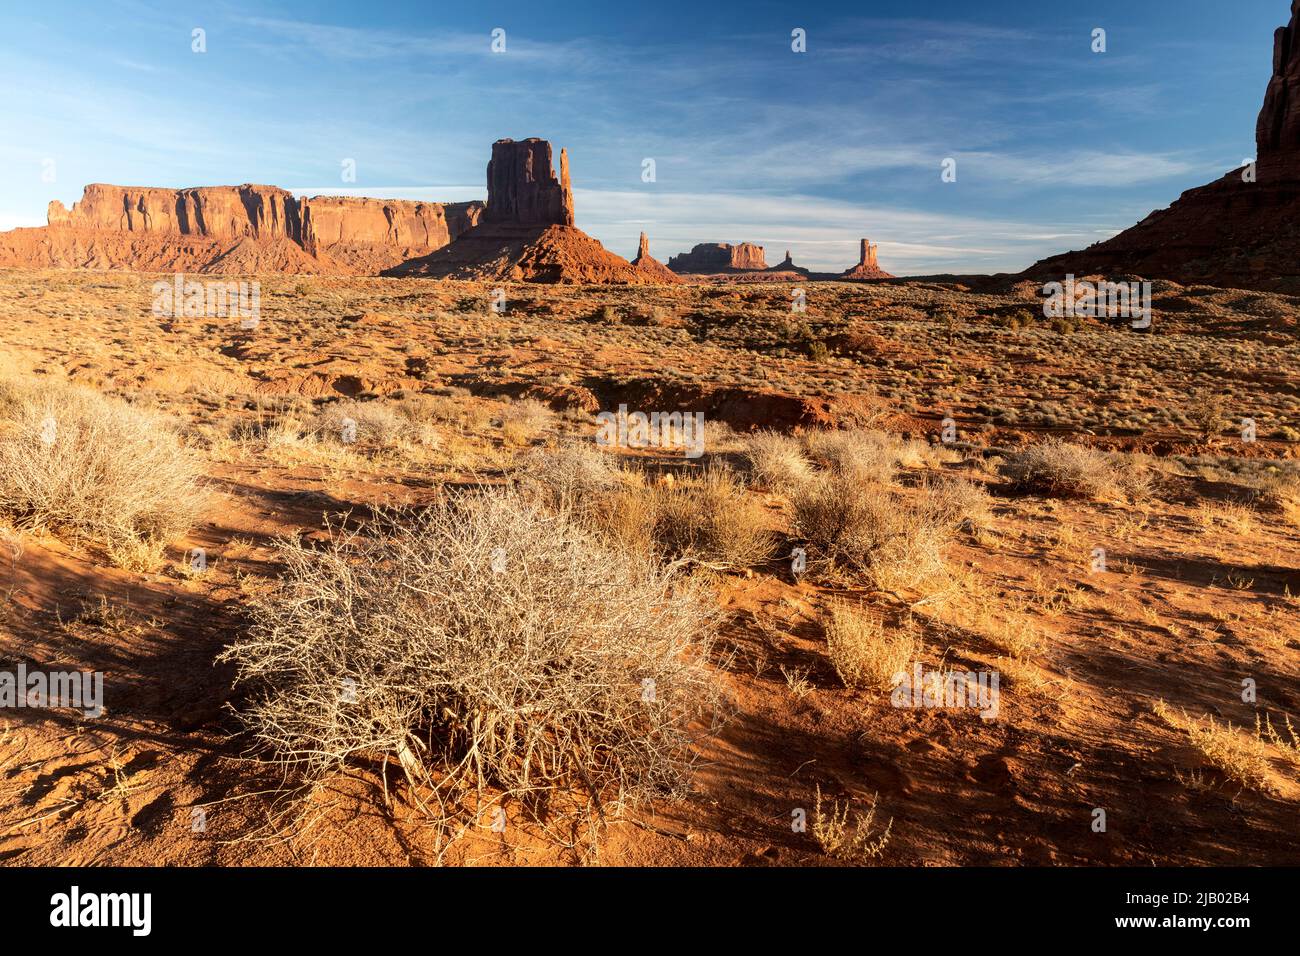 AZ00421-00....ARIZONA - Sandsteinbutten im Monument Valley Navajo Tribal Park. Stockfoto